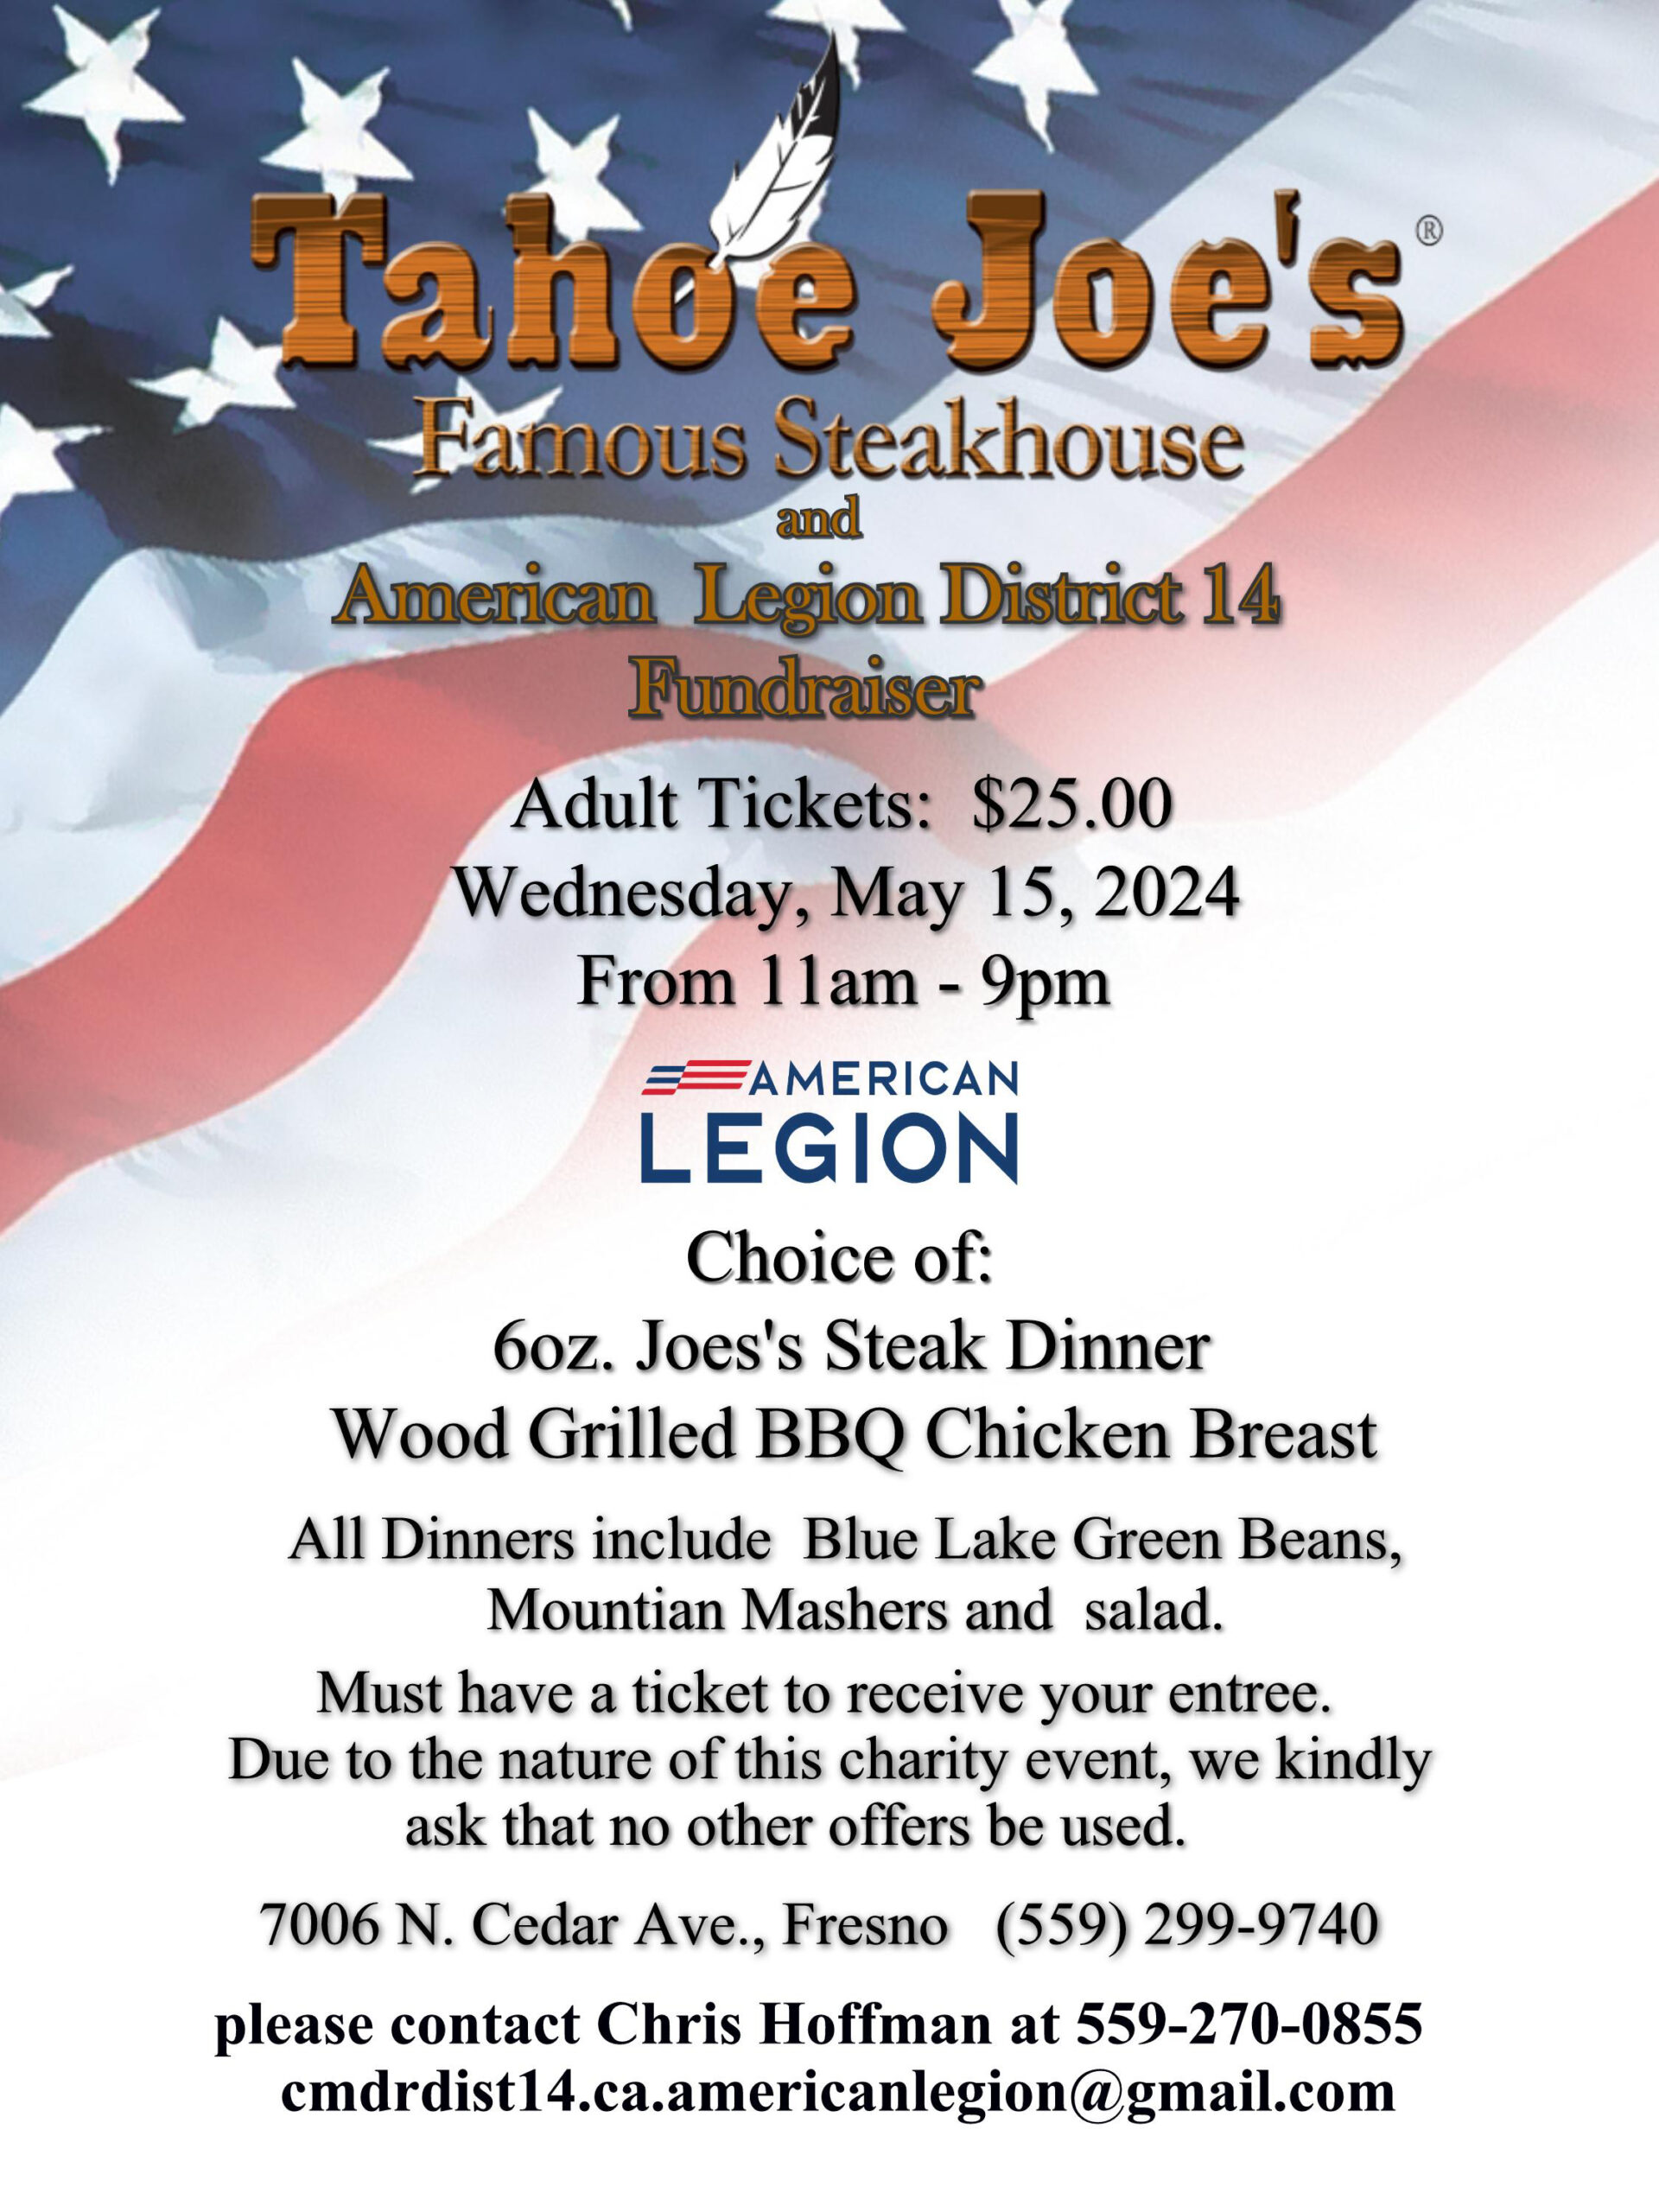 District 14 Tahoe Joe's fundraiser flyer